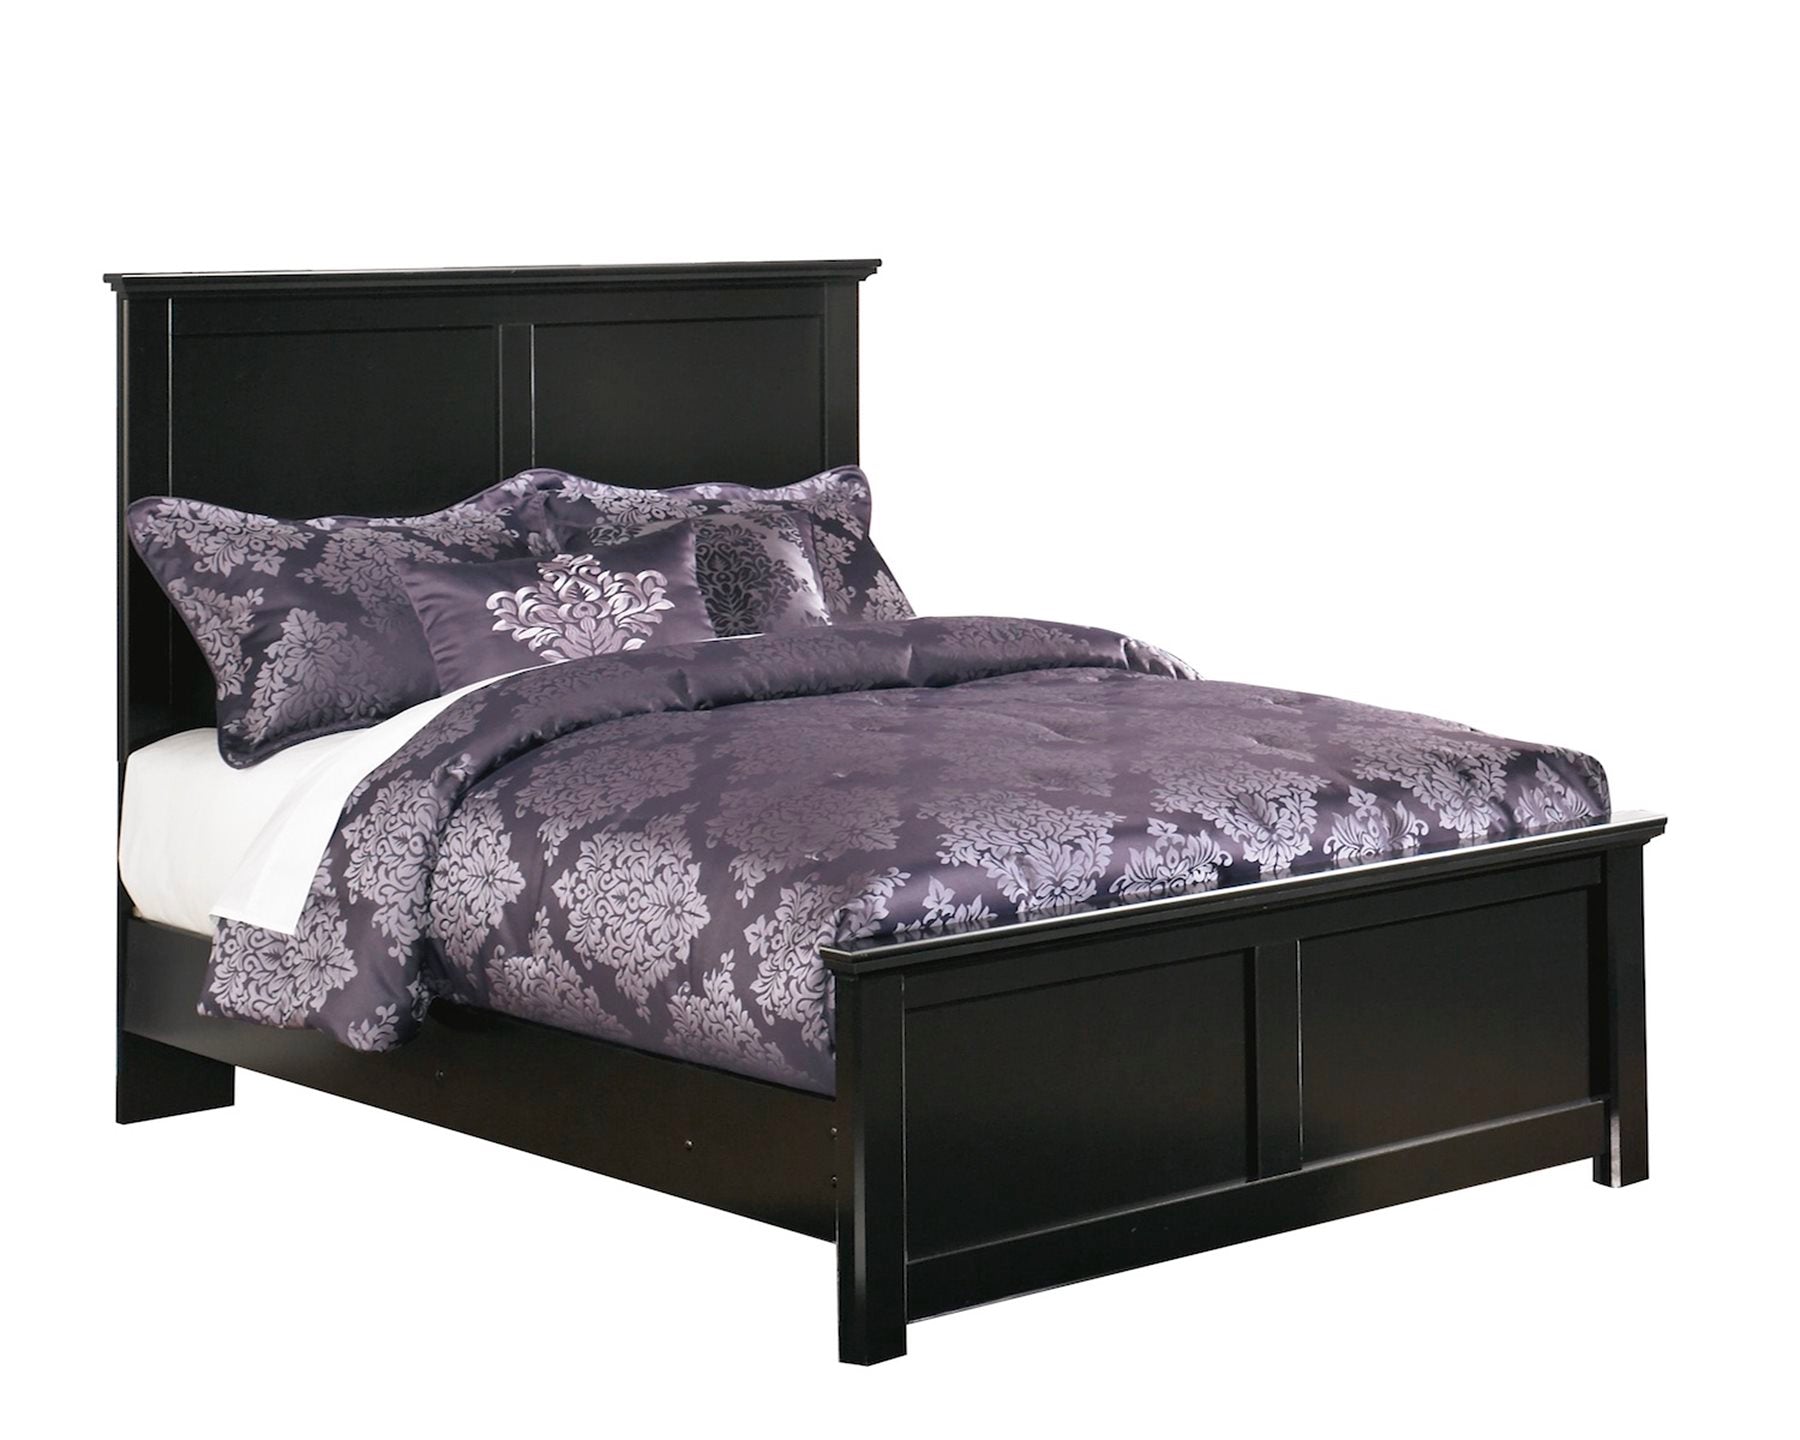 Ashley Maribel 4 PC Full Panel Headboard Bedroom Set in Black - The Furniture Space.